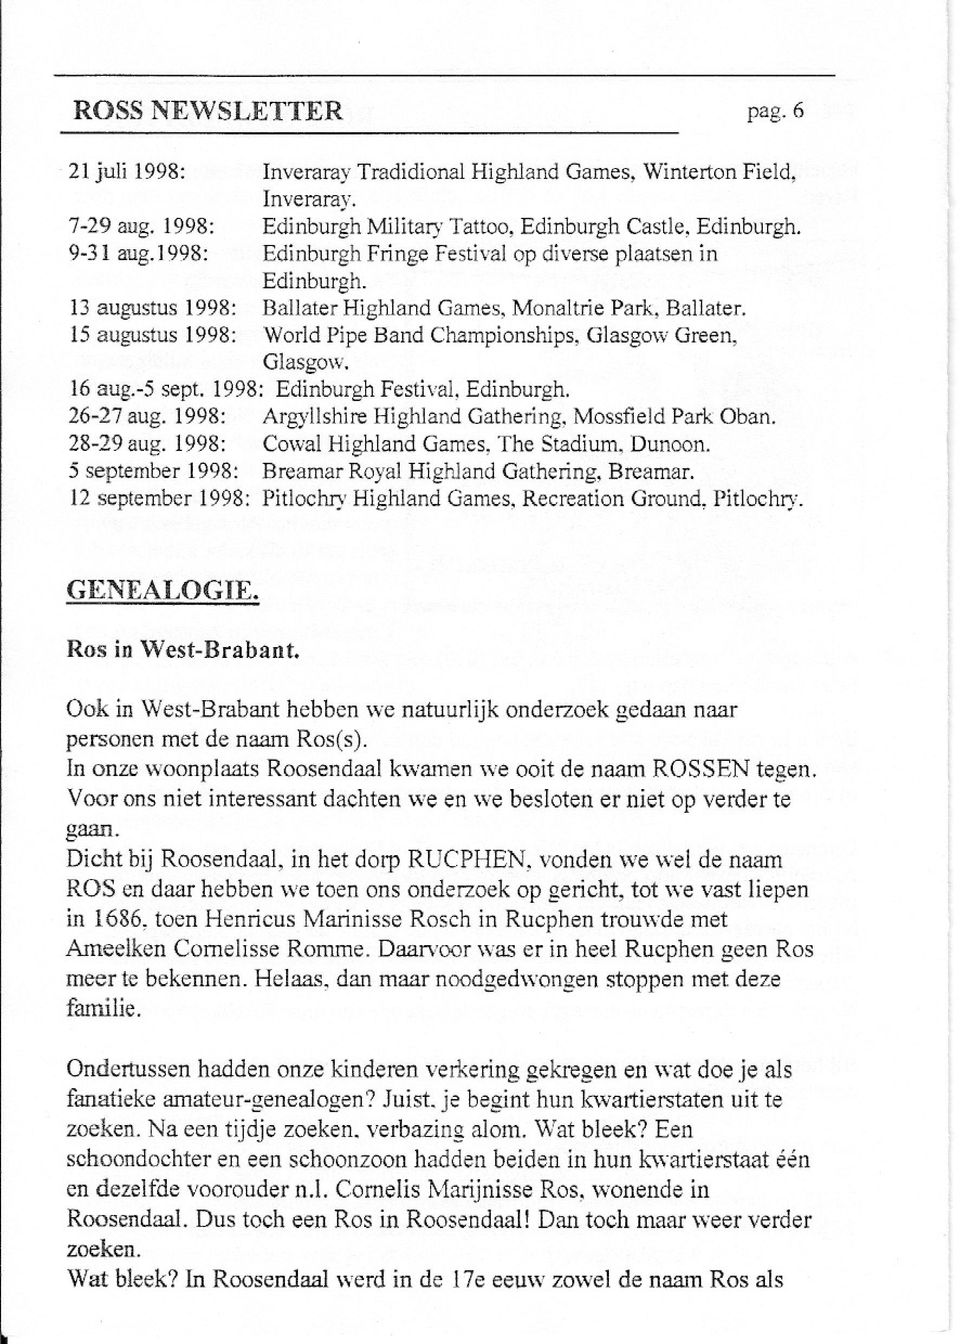 15 augustus 1998: World Pipe Band Championships, Glasgow Green, Glasgow. 16 aug.-5 sept. 1998: Edinburgh Festival, Edinburgh. 26-27 aug. 1998: Argyllshire Highland Gathering, Mossfield Park Oban.